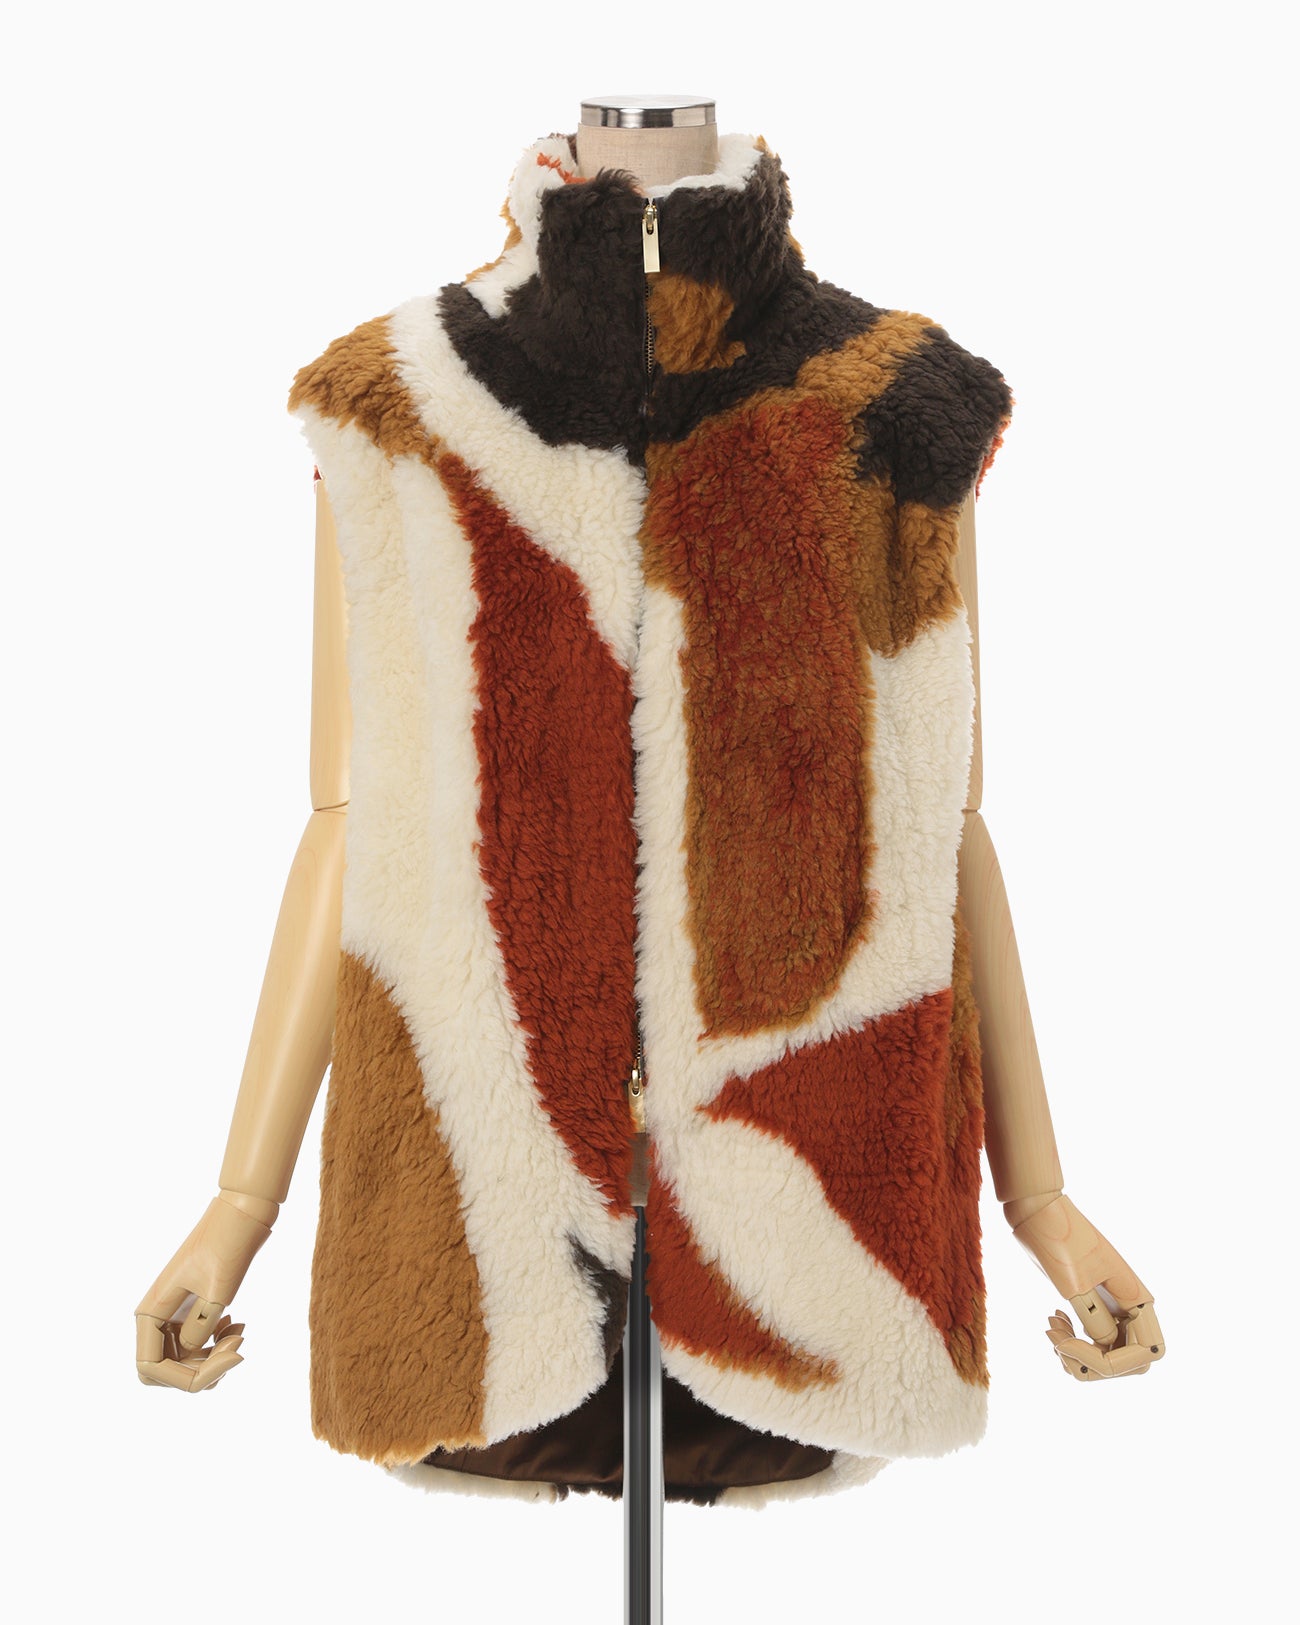 Sliver Knitted Fluffy Wool Vest - brown